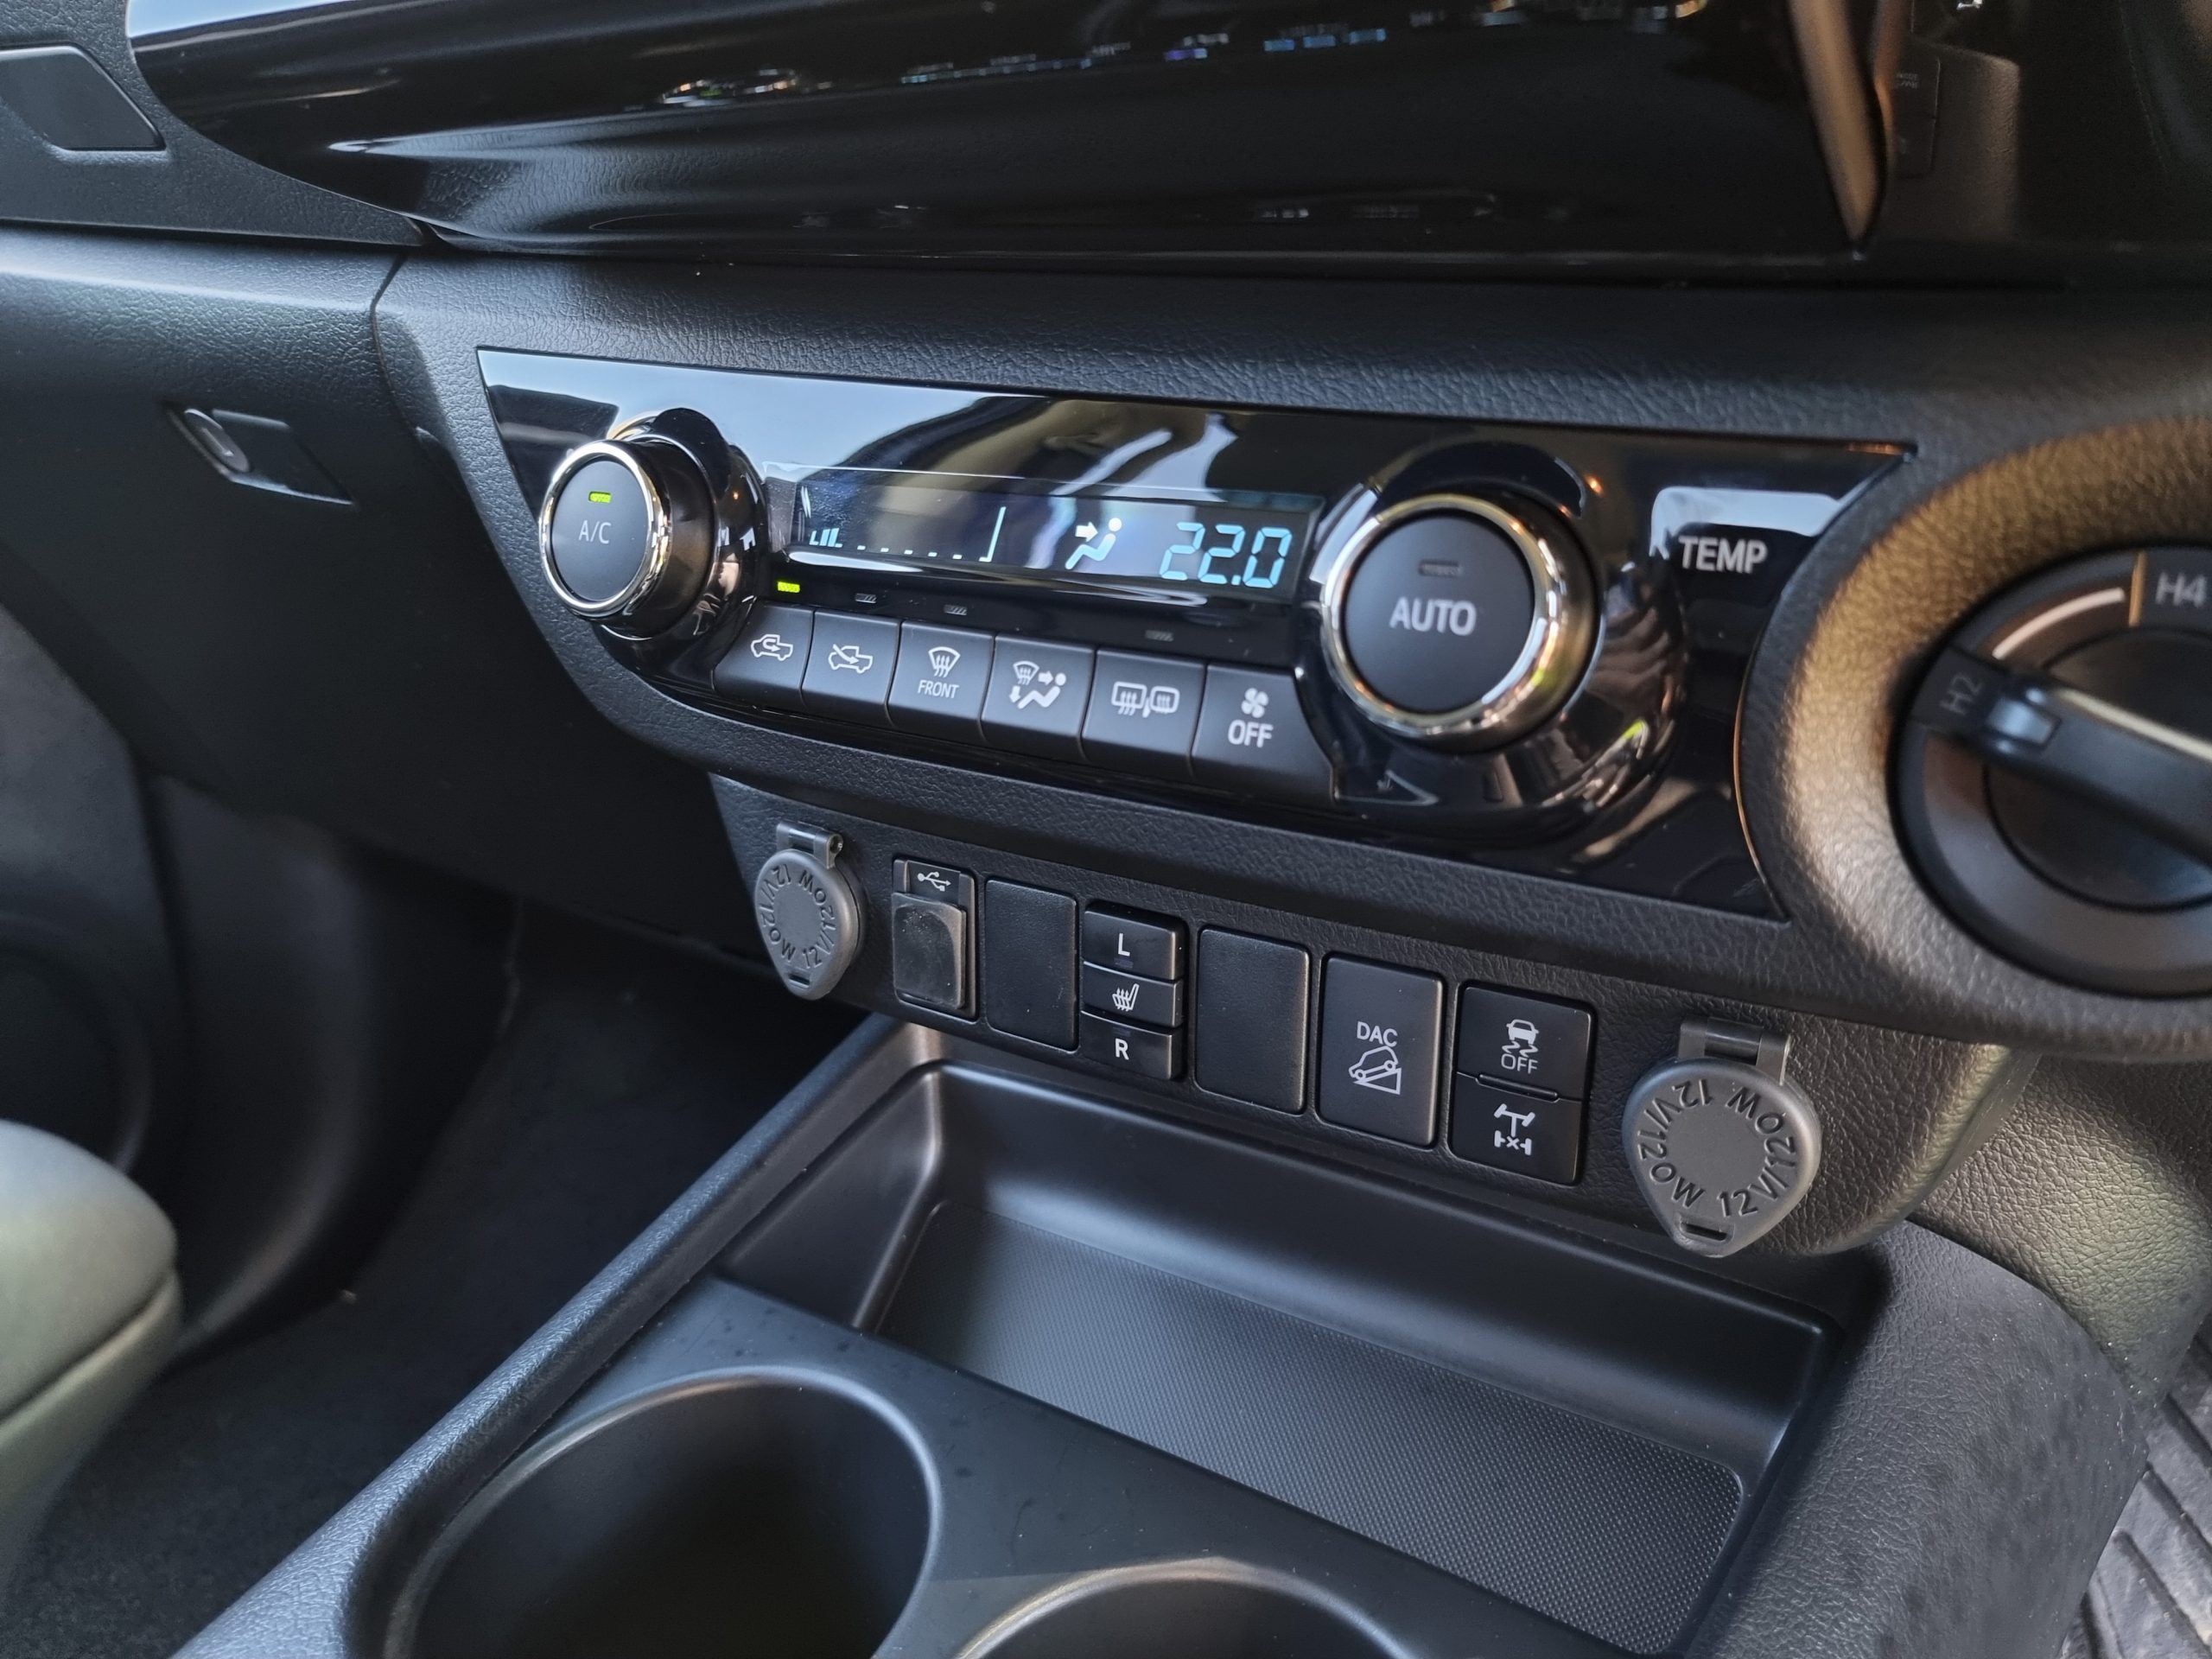 2022 Toyota HiLux SR5 interior